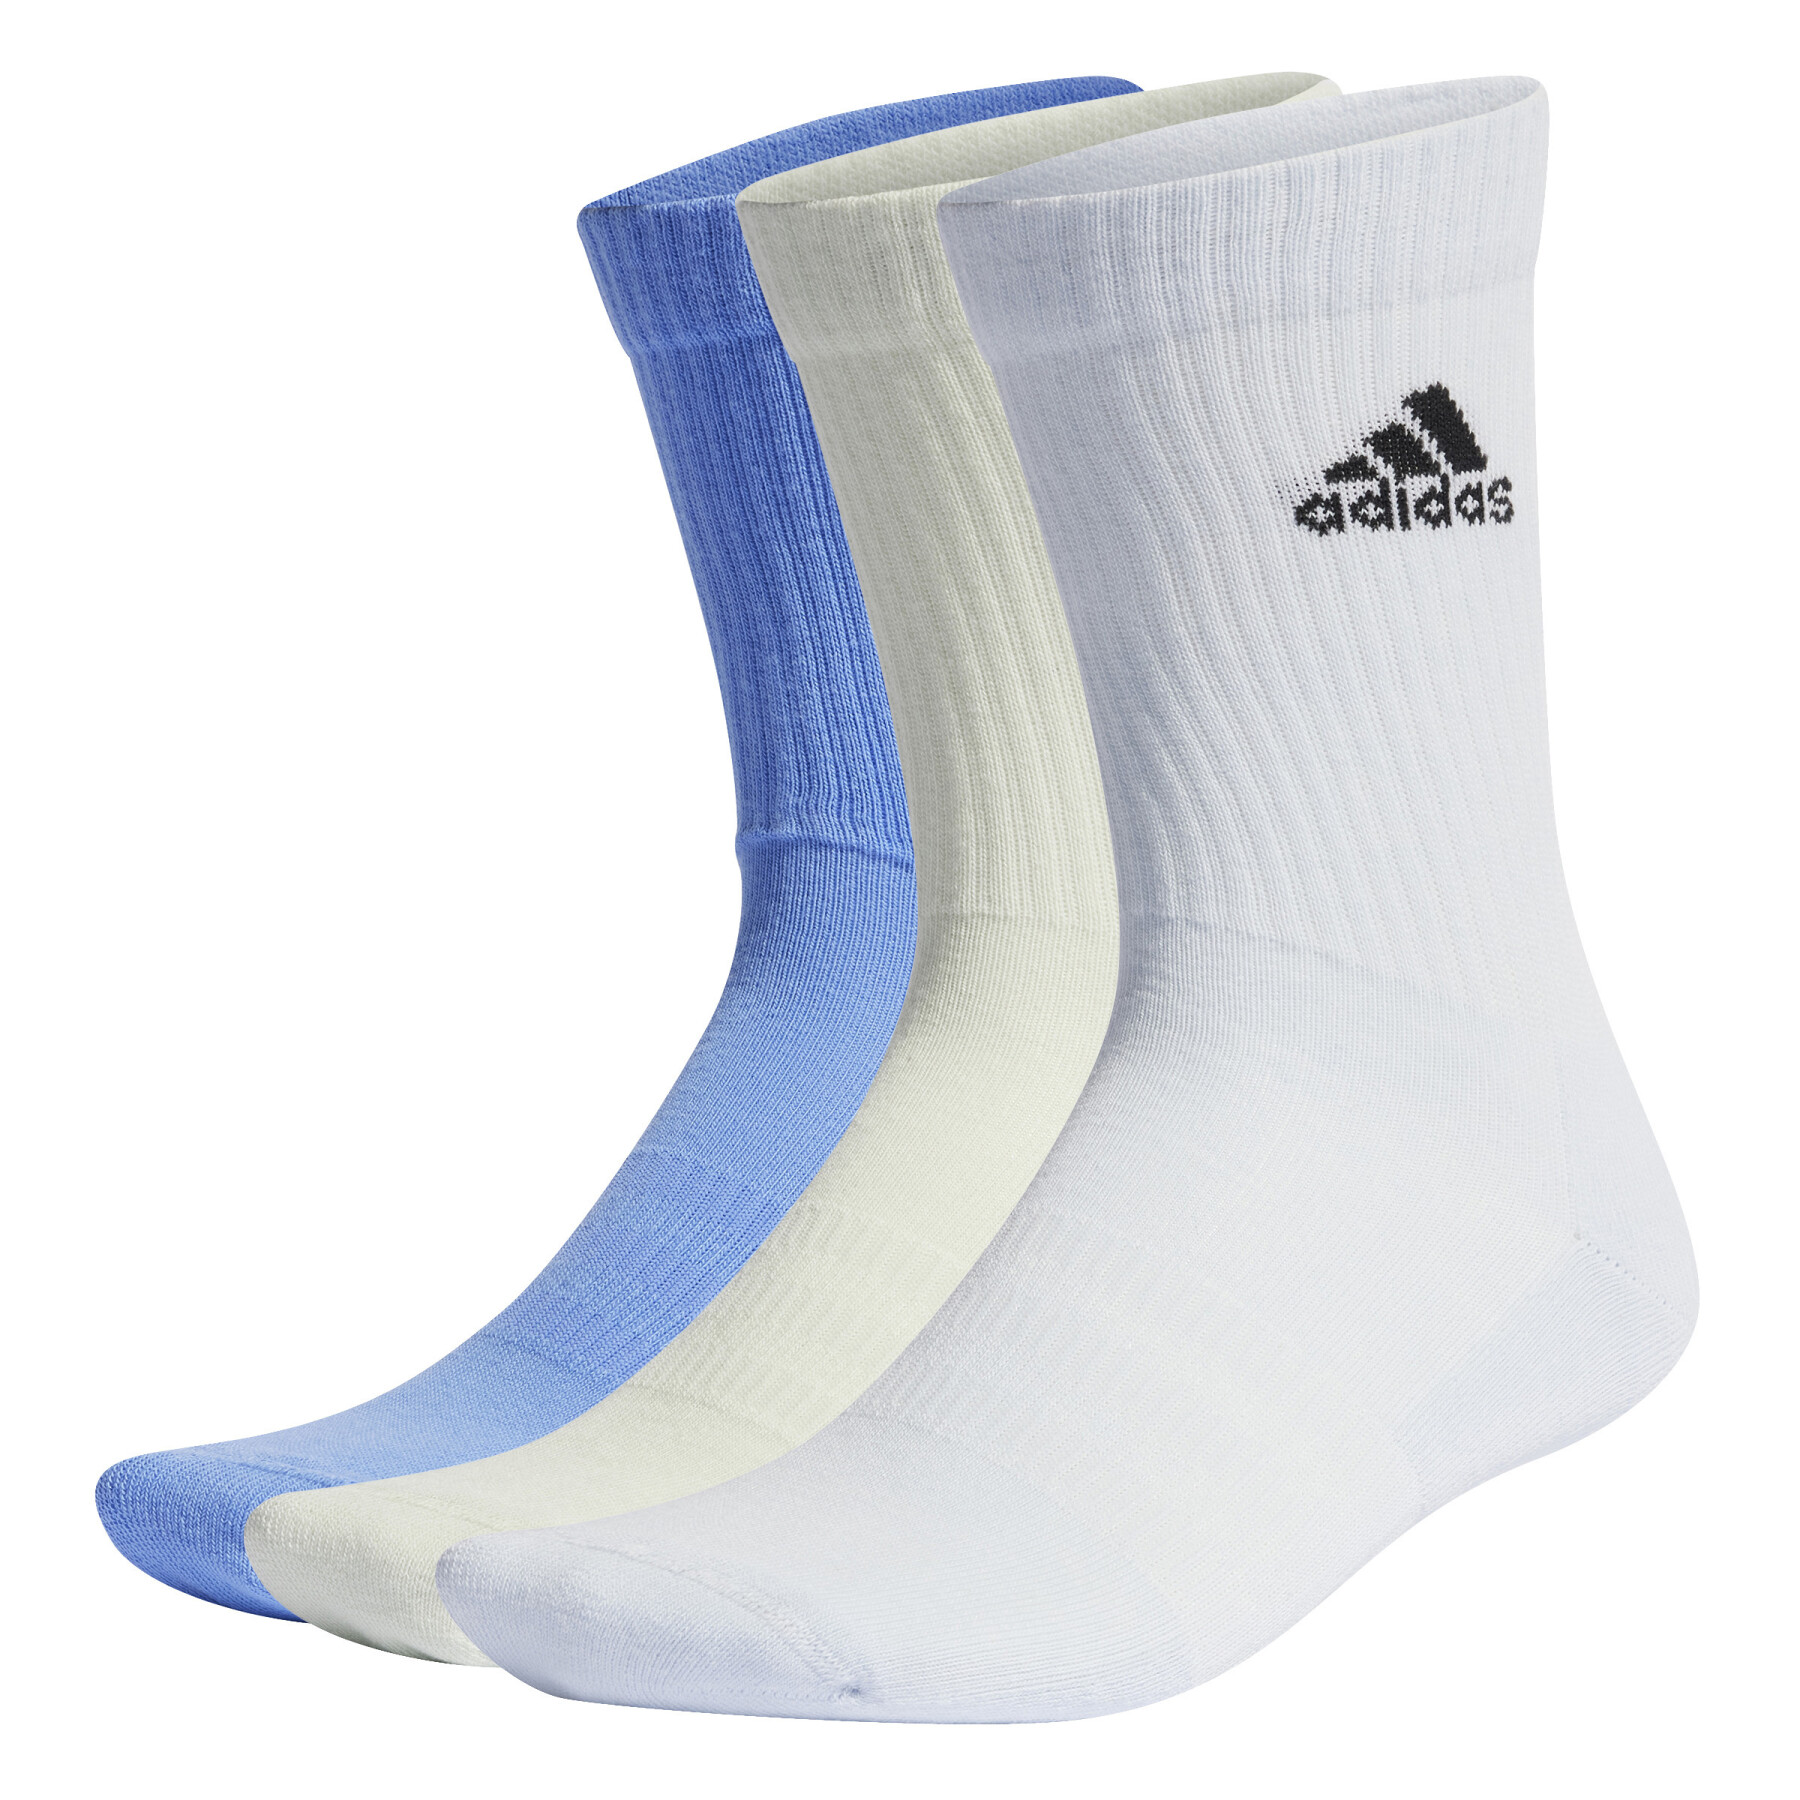 Hohe Socken adidas (x3)